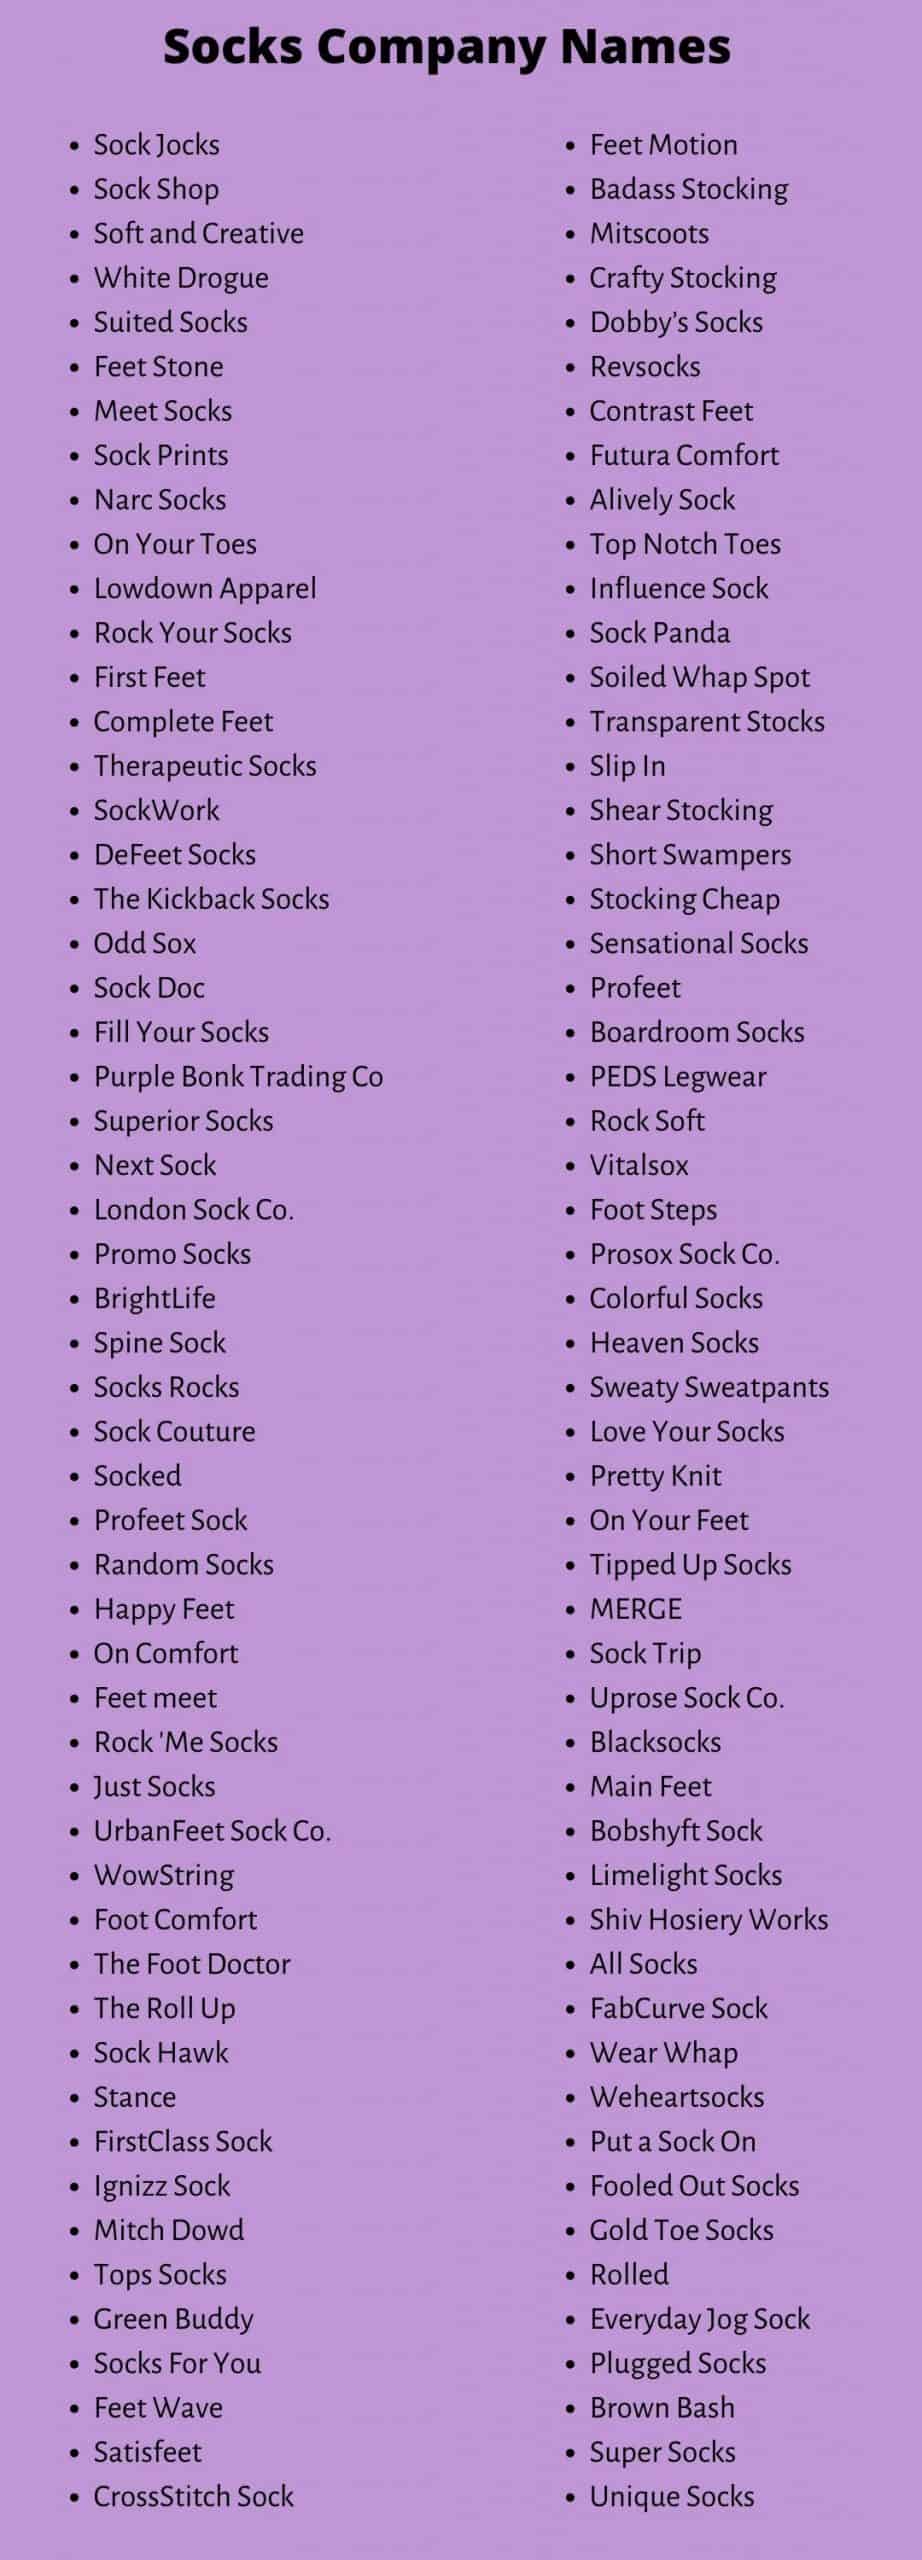 Socks Company Names